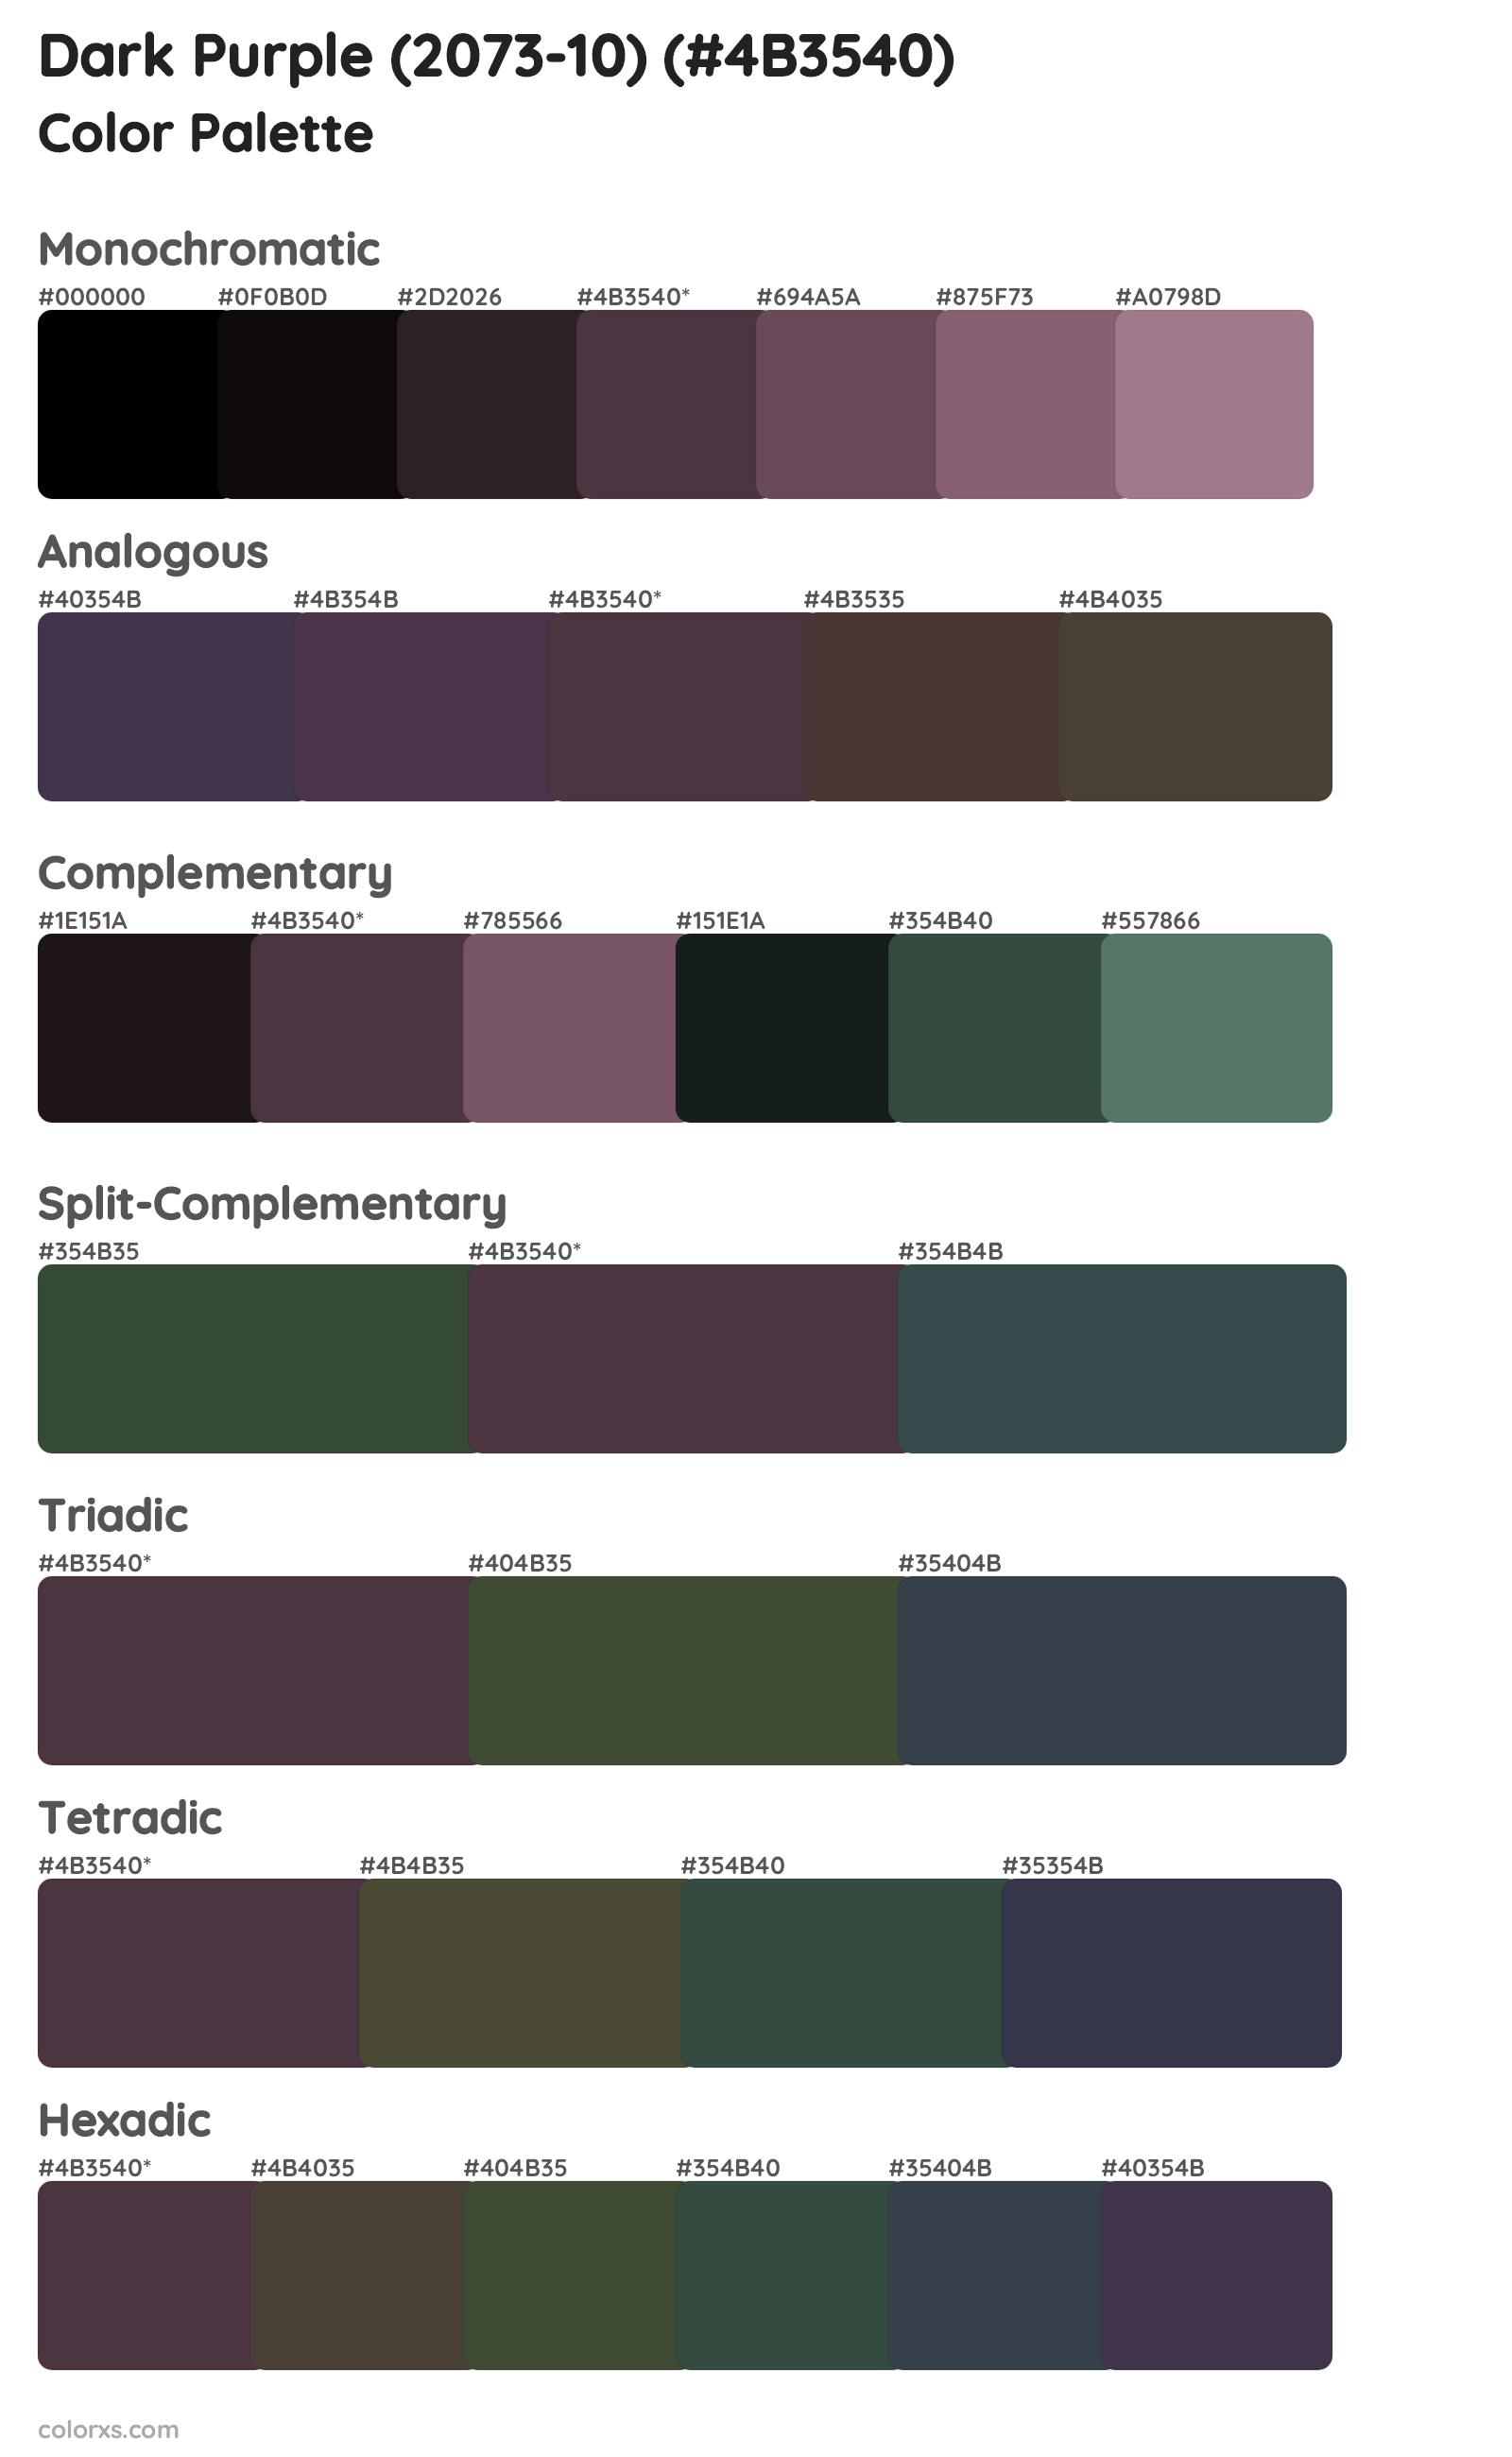 Dark Purple (2073-10) Color Scheme Palettes